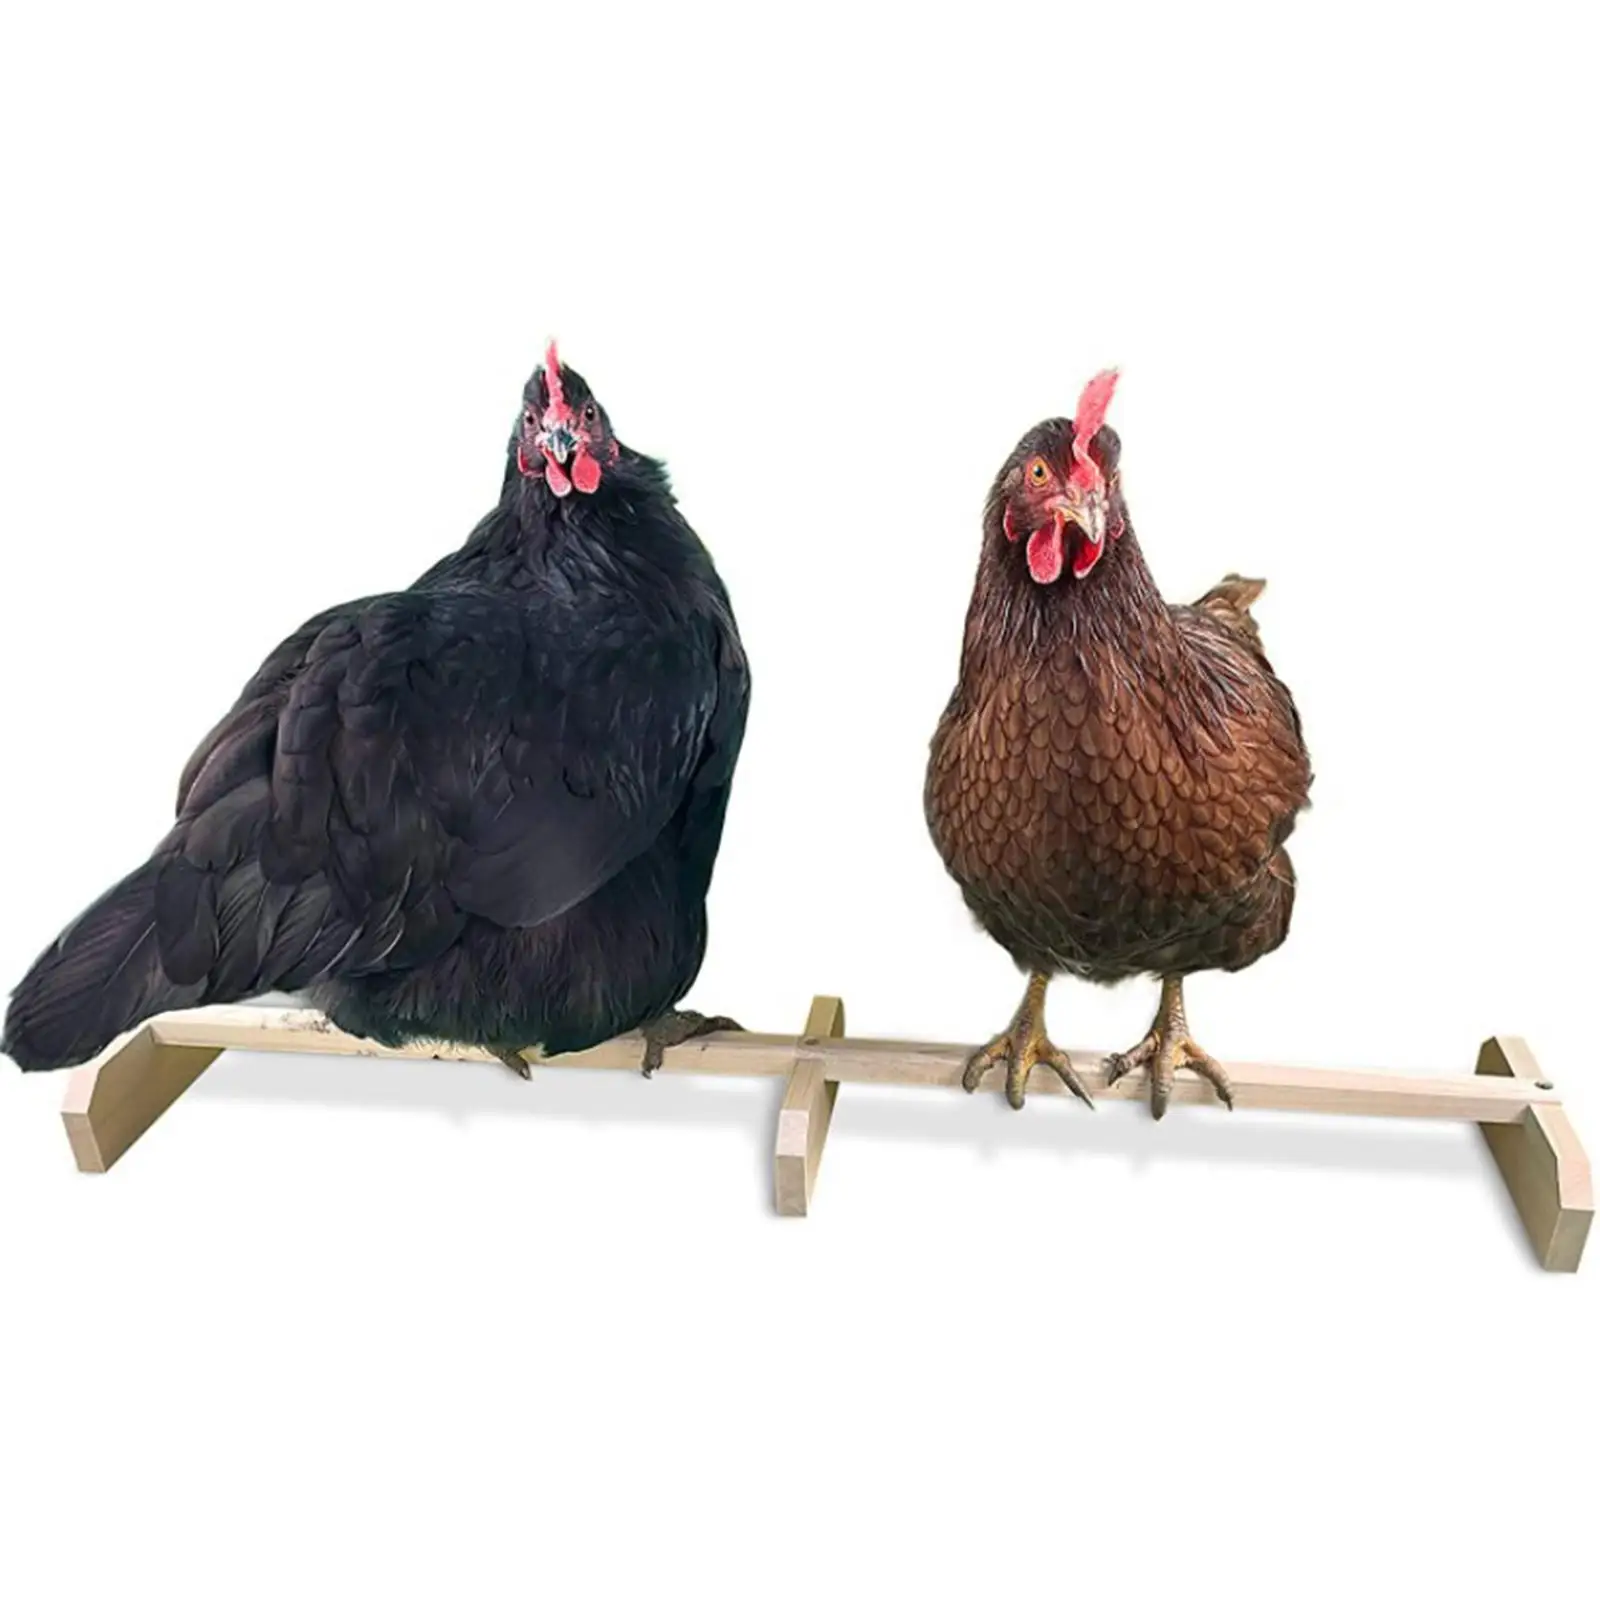 Wooden Chicken Perch Chicken Coop Accessories Chicken Swing Roosting Bar Bird Perch Stand for Baby Chicks Large Bird Macaw Hens